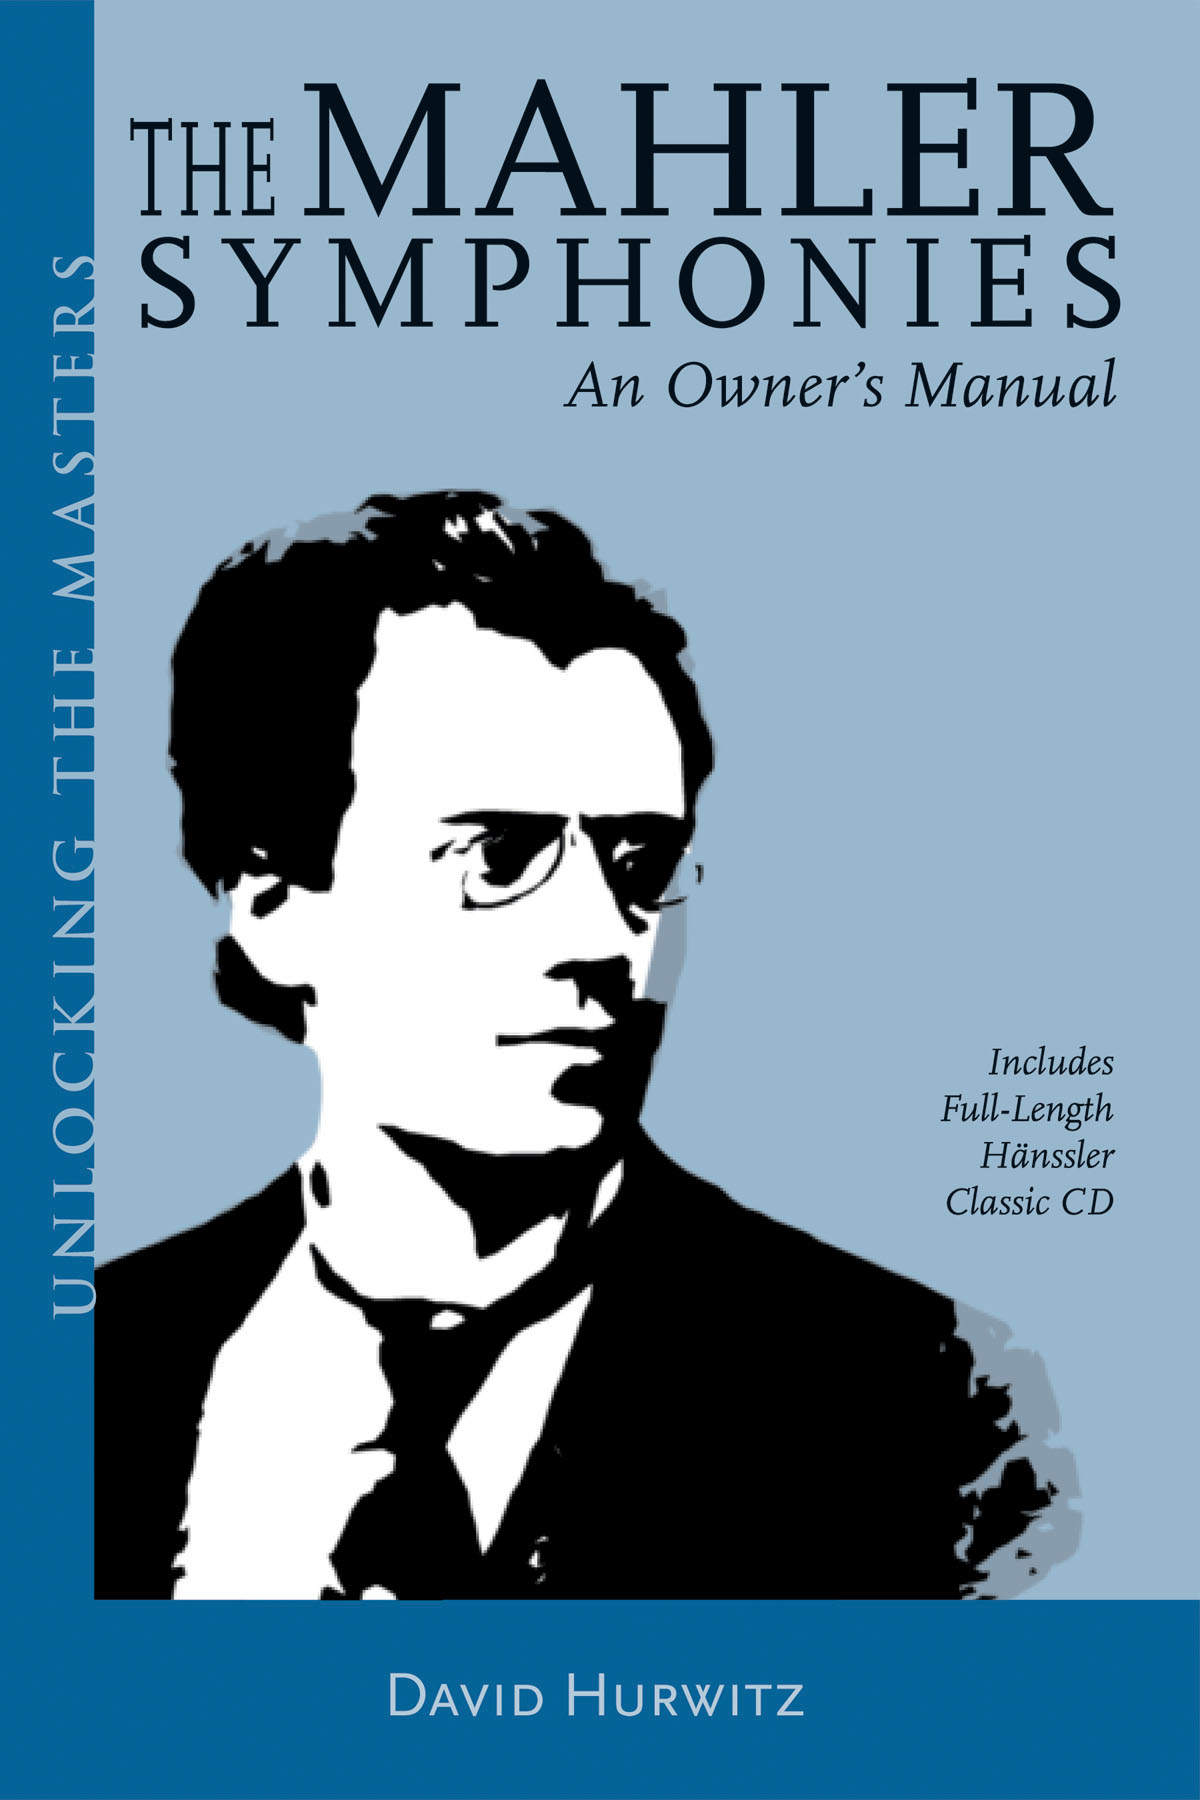 Gustav Mahler: The Mahler Symphonies - An Owner's Manual: Reference Books: